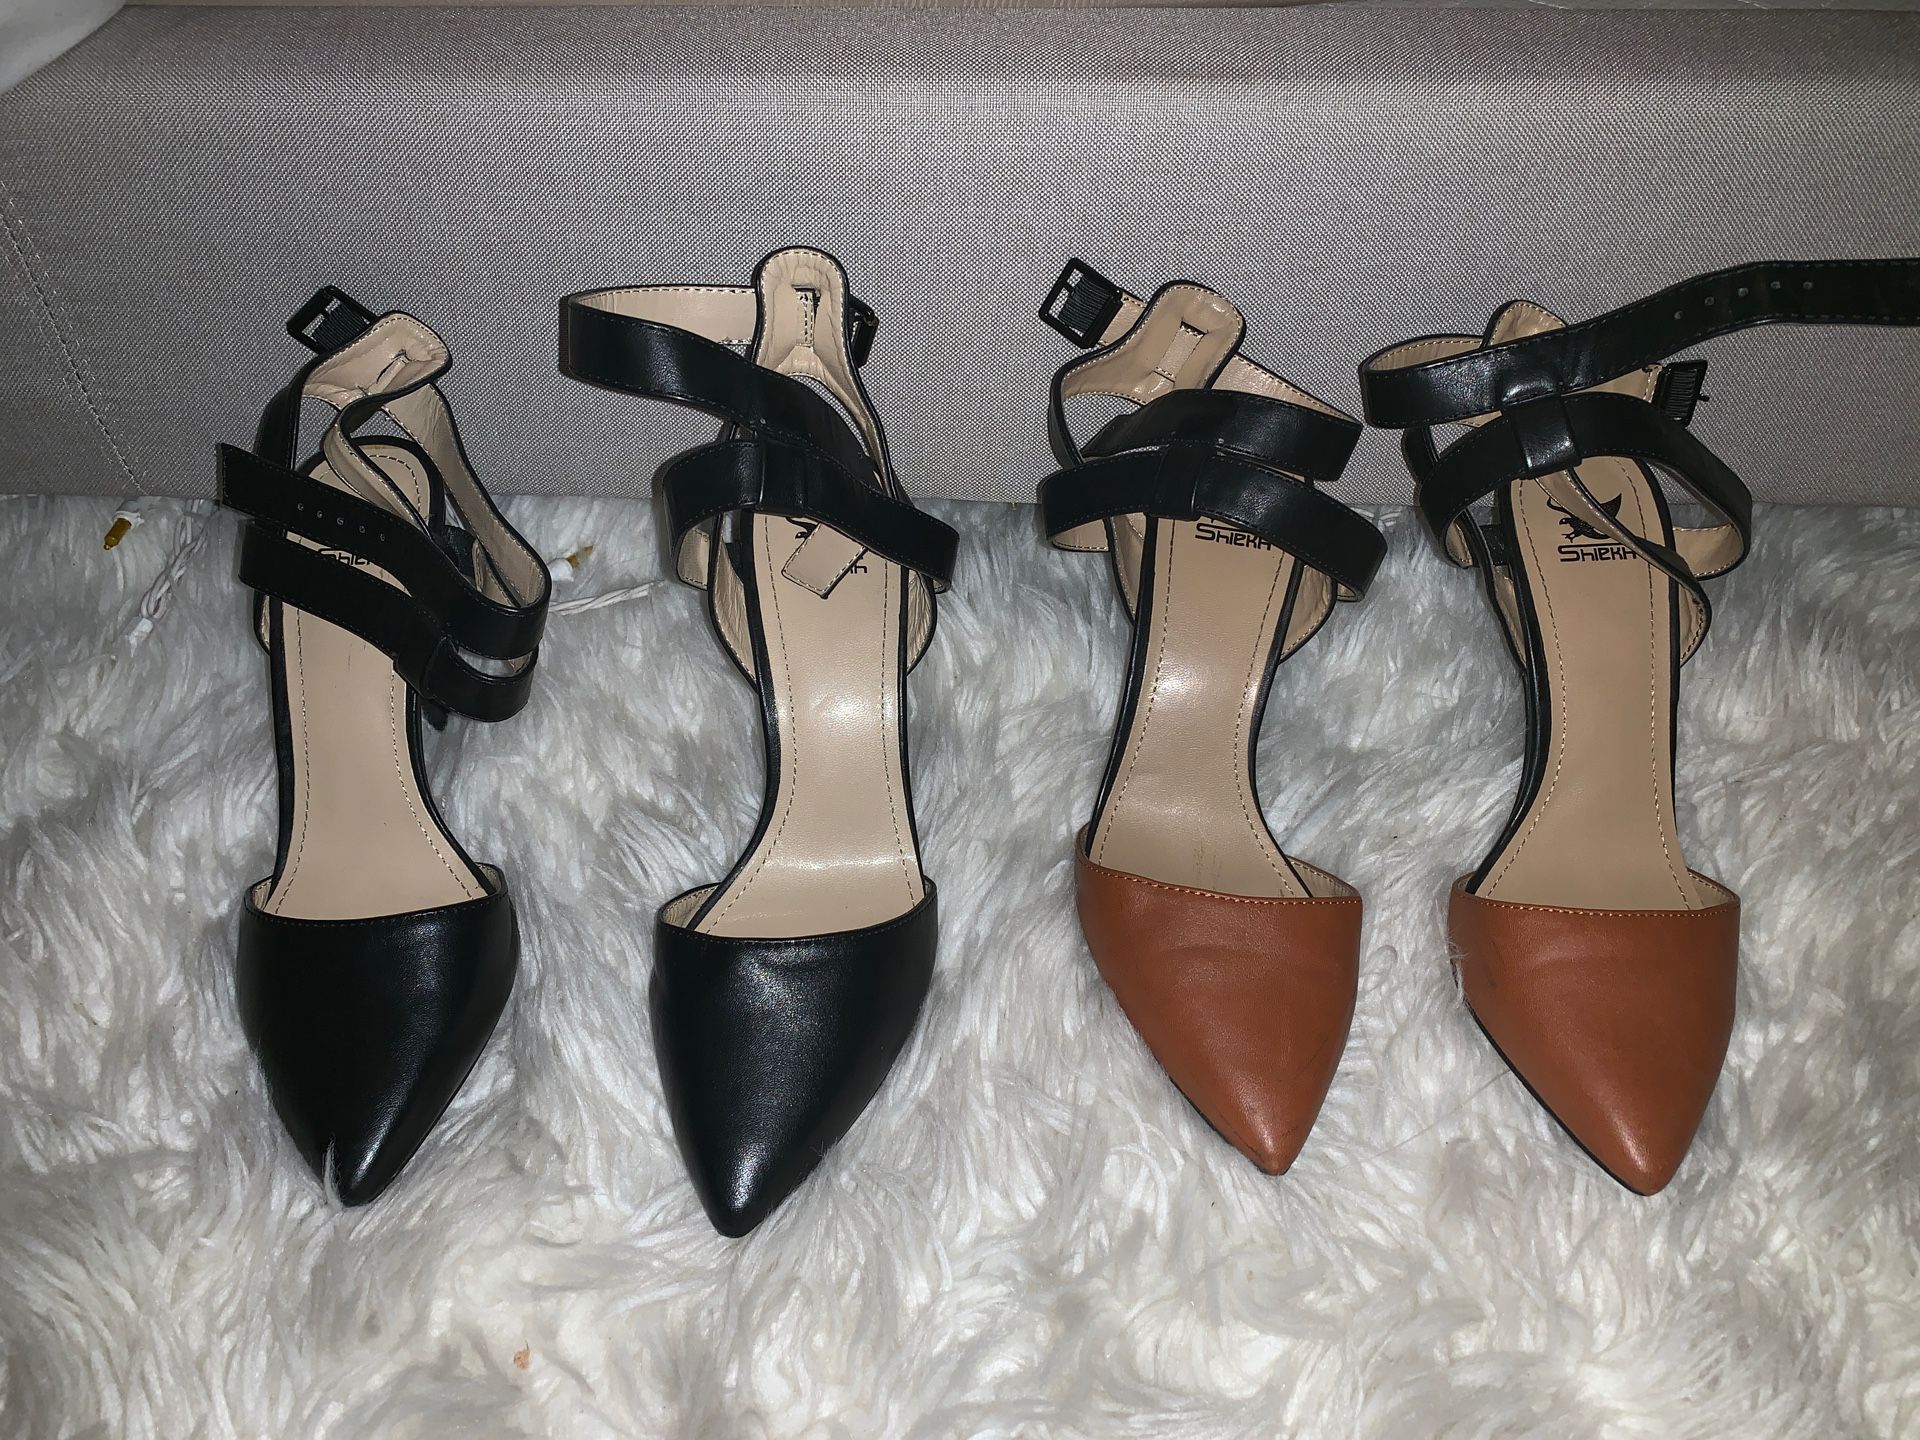 Brand new size 8 heels